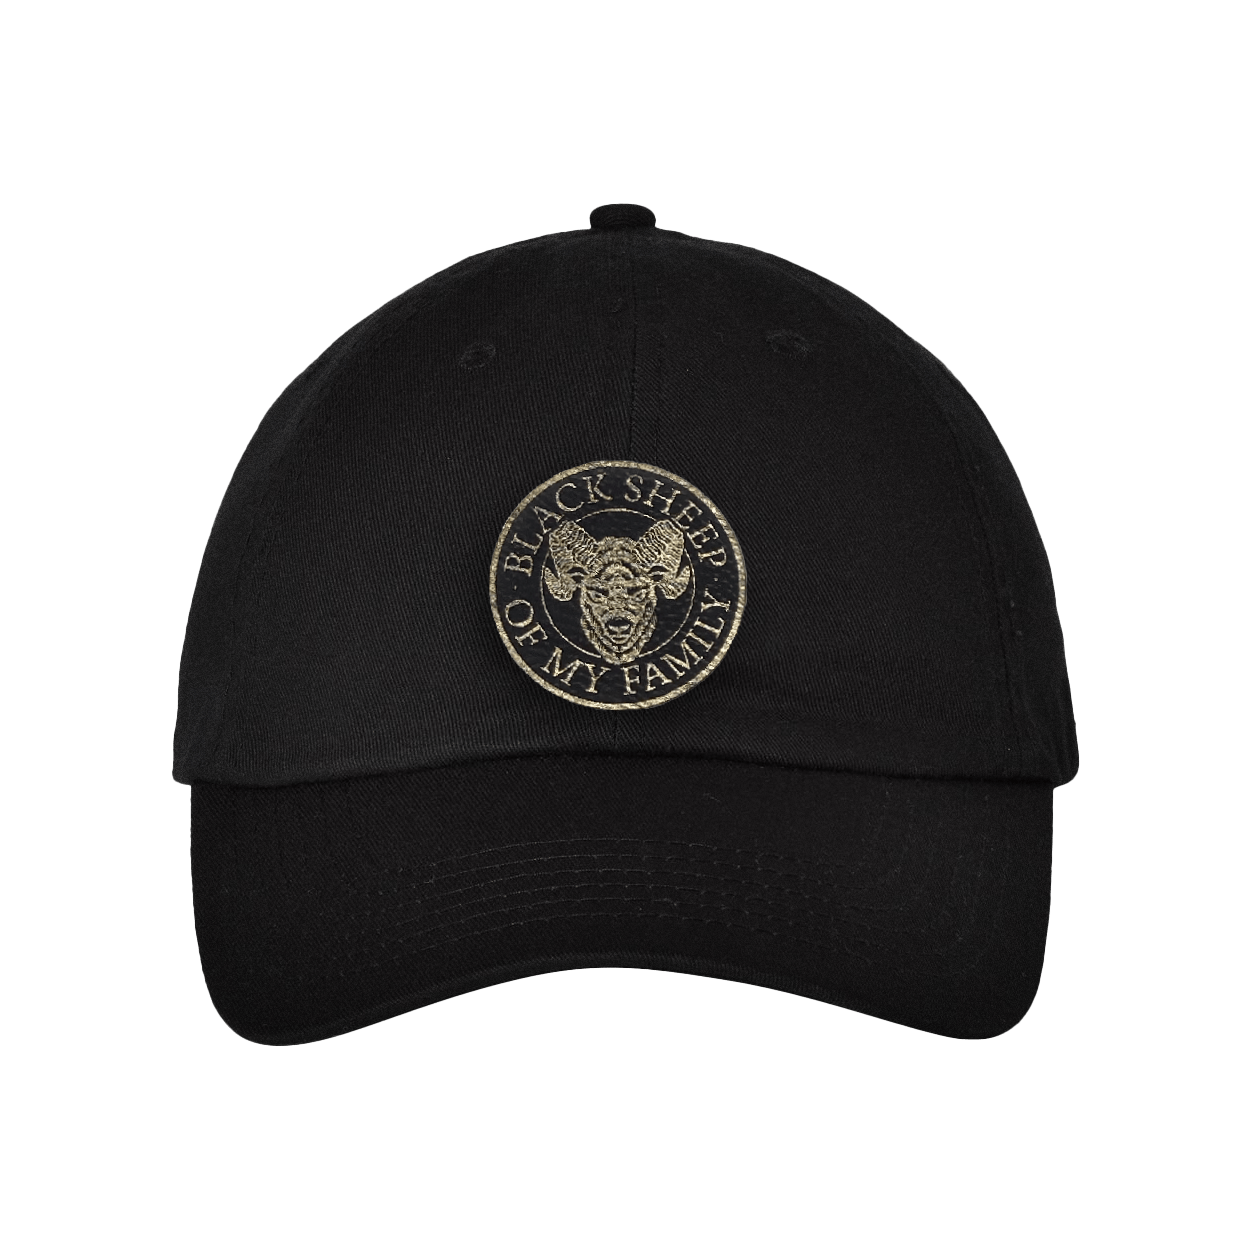 Black Sheep Black Dad Hat